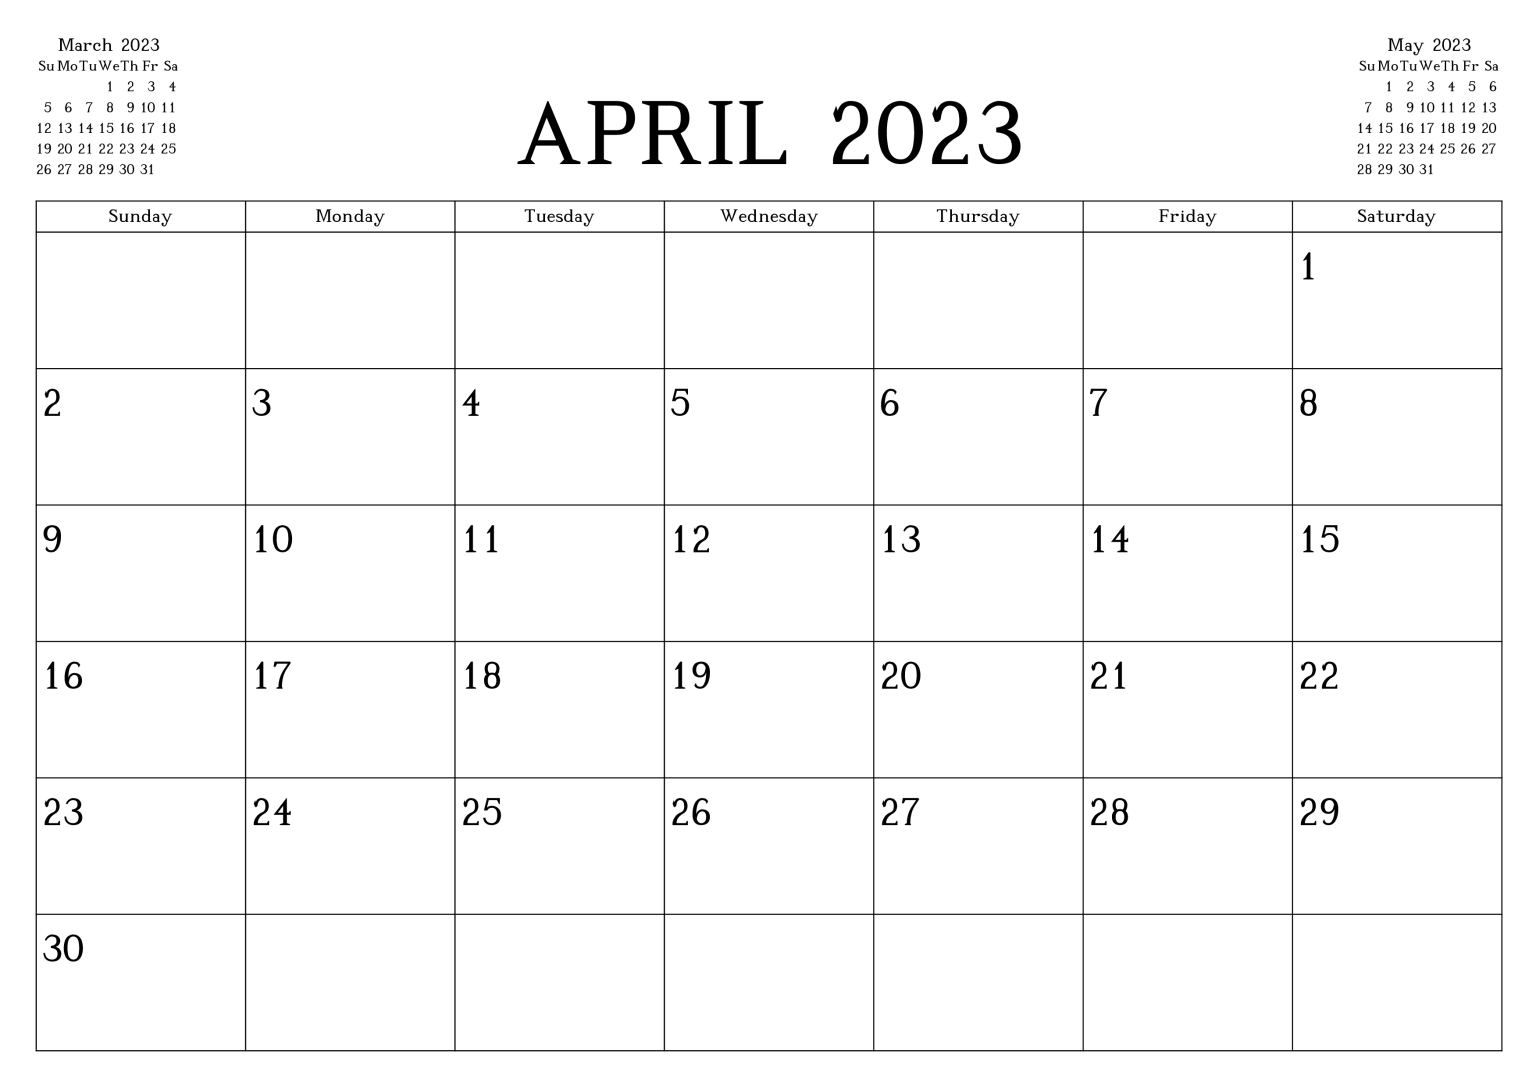 April 2023 Calendar - Celebrate Easter Day